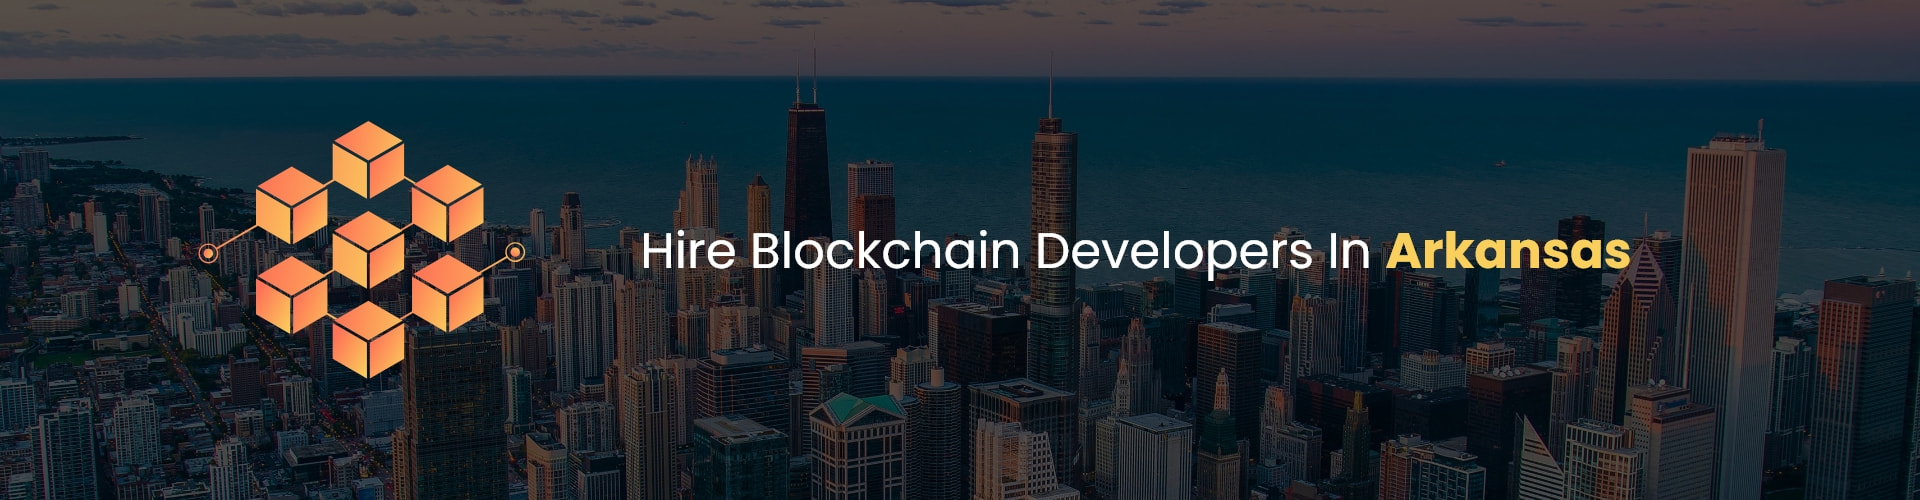 hire blockchain developers in arkansas